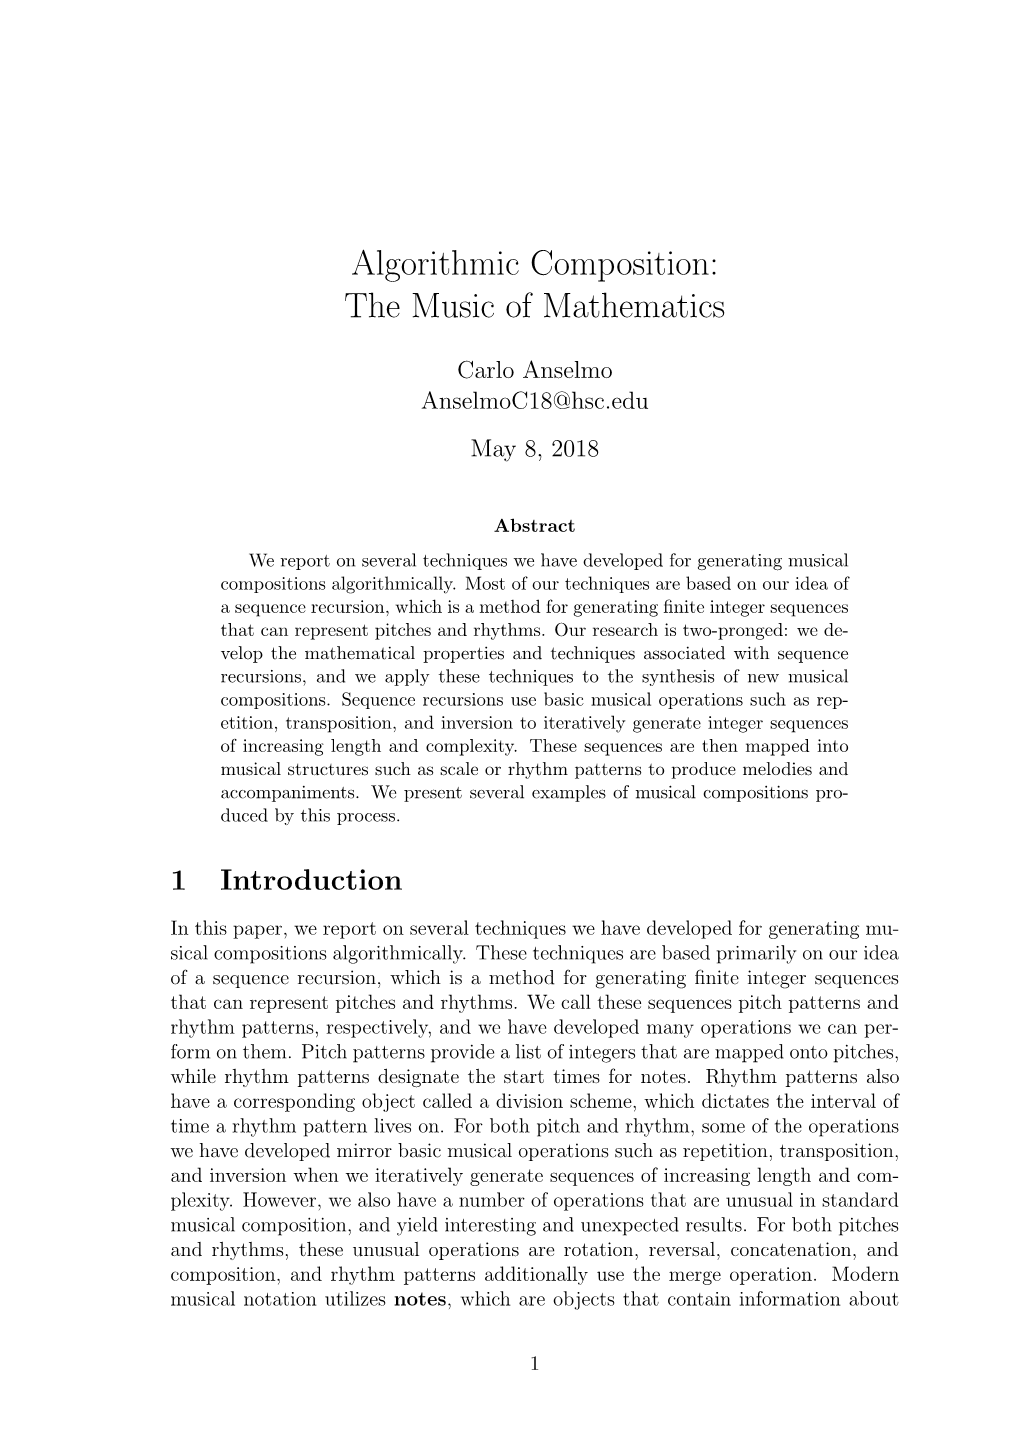 Algorithmic Composition: the Music of Mathematics